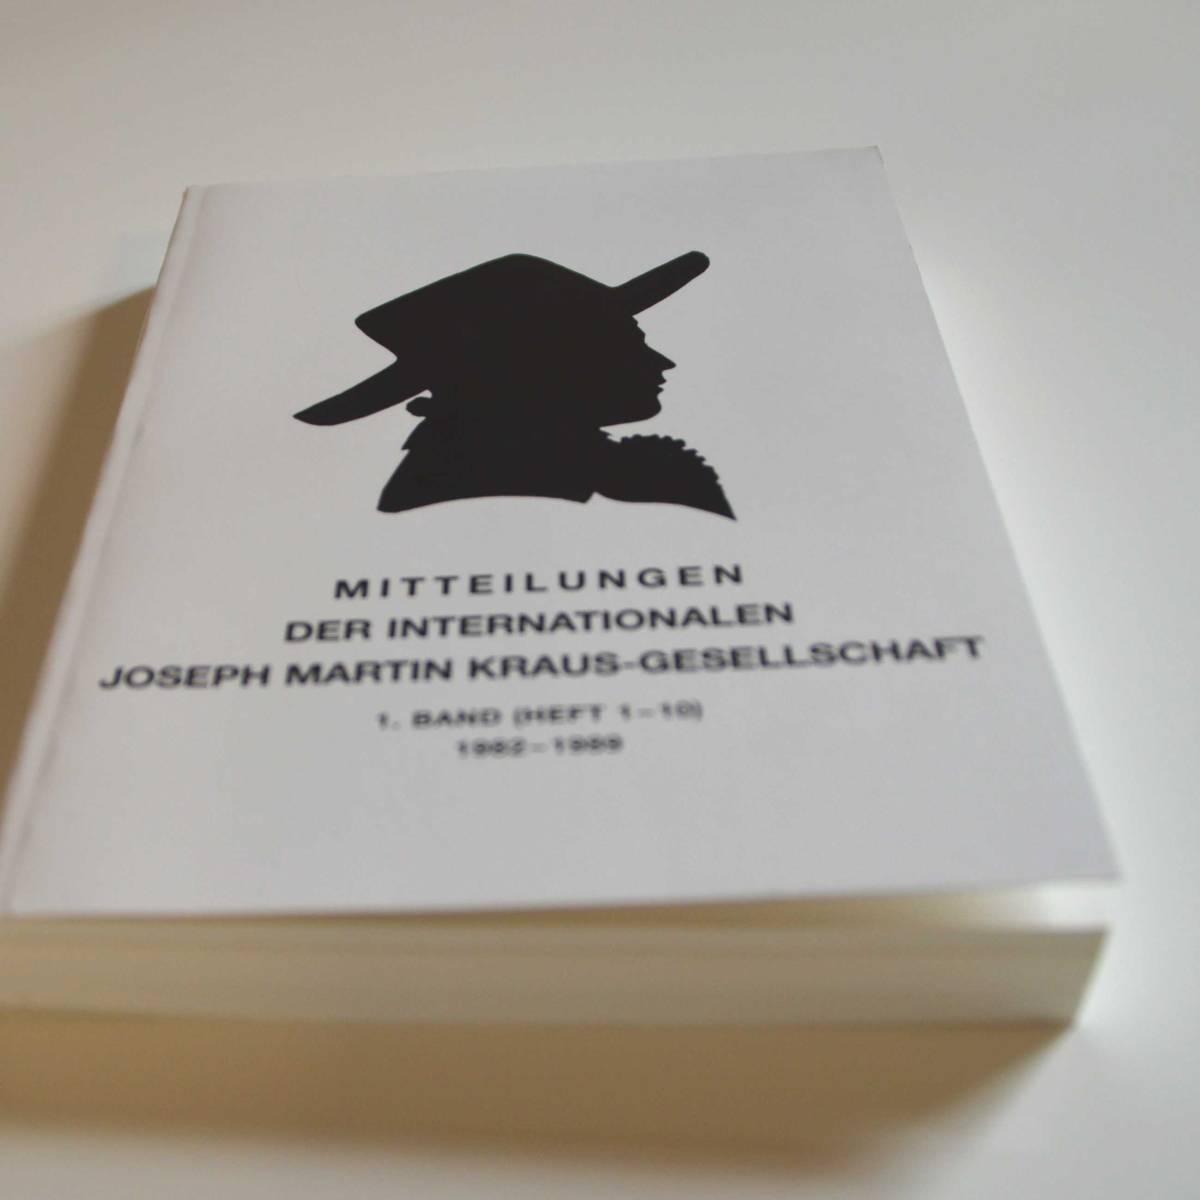 Mitteilungen der Internationalen Joseph Martin Kraus-Gesellschaft 1. Sammelband (Heft 1-10)